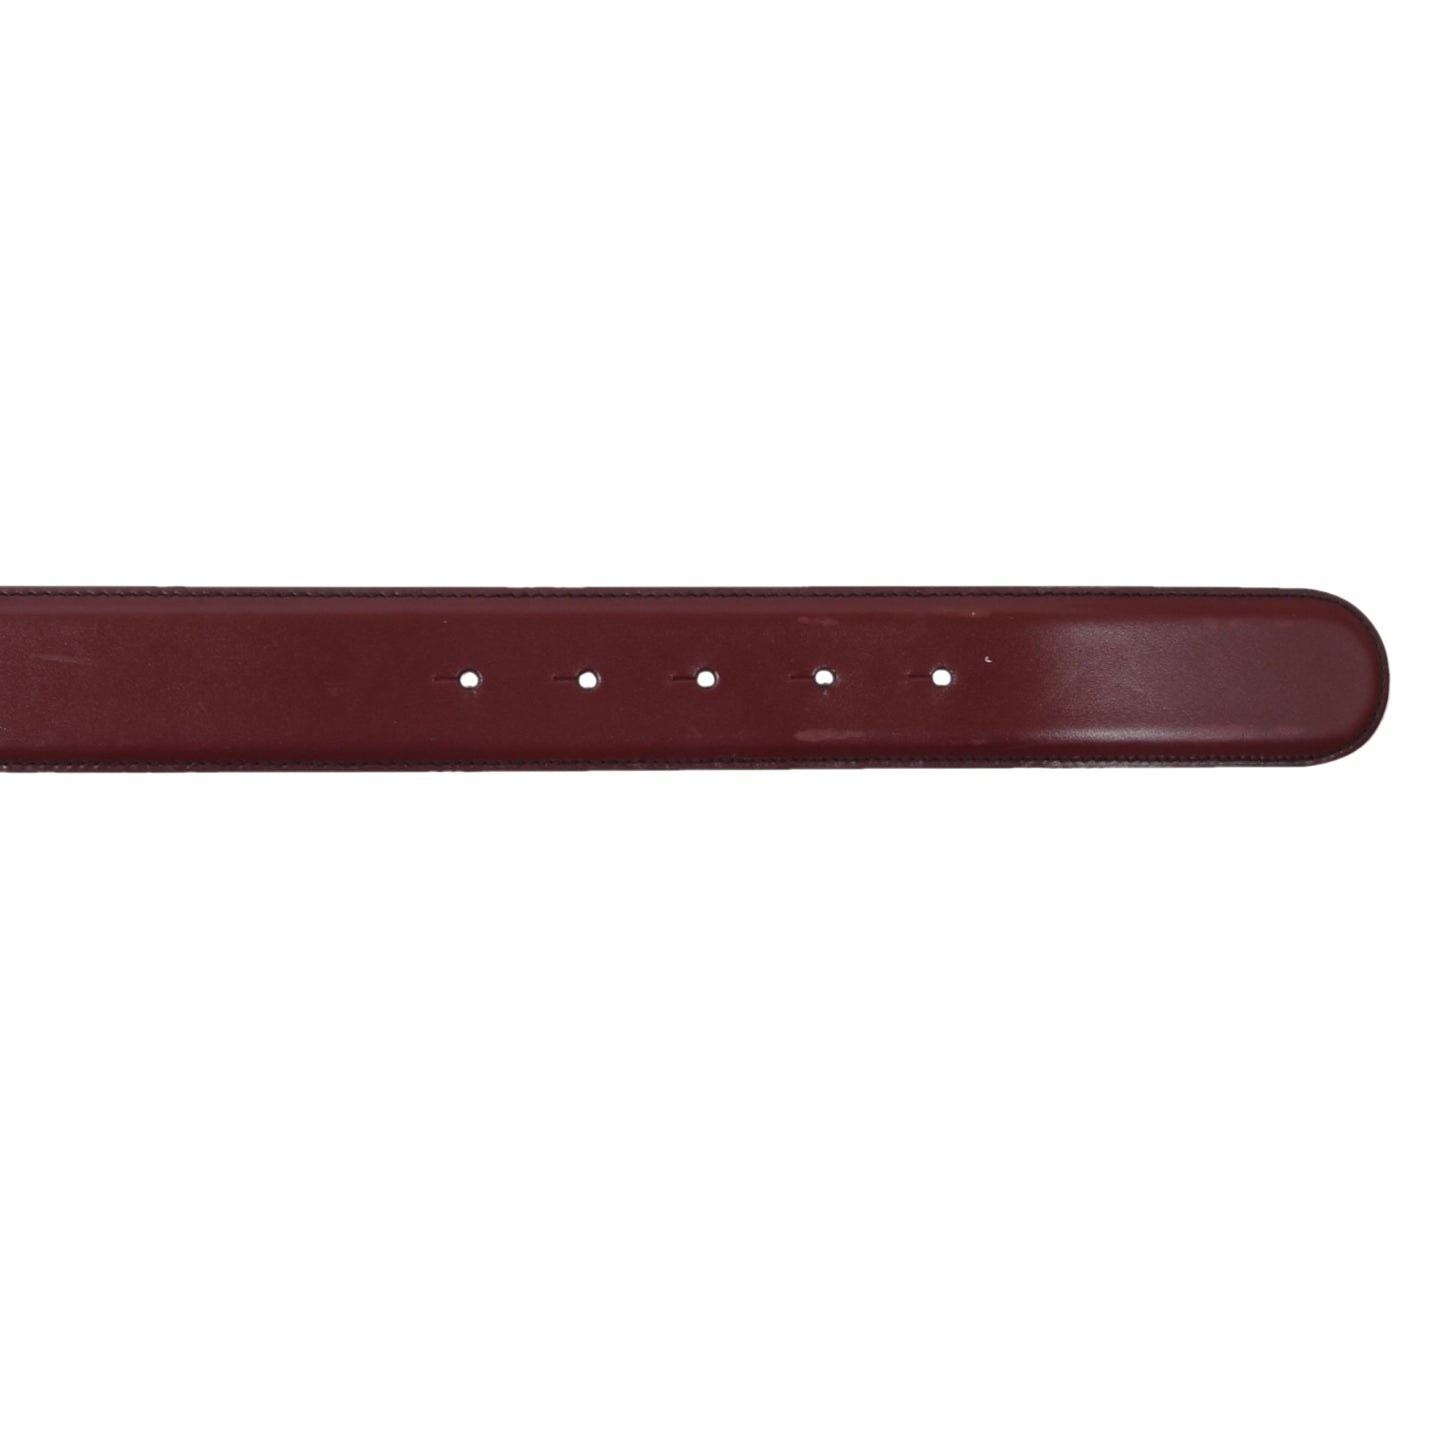 Etienne Aigner Leather Belt Size 85/34 ca. 100cm - Brown-Burgundy